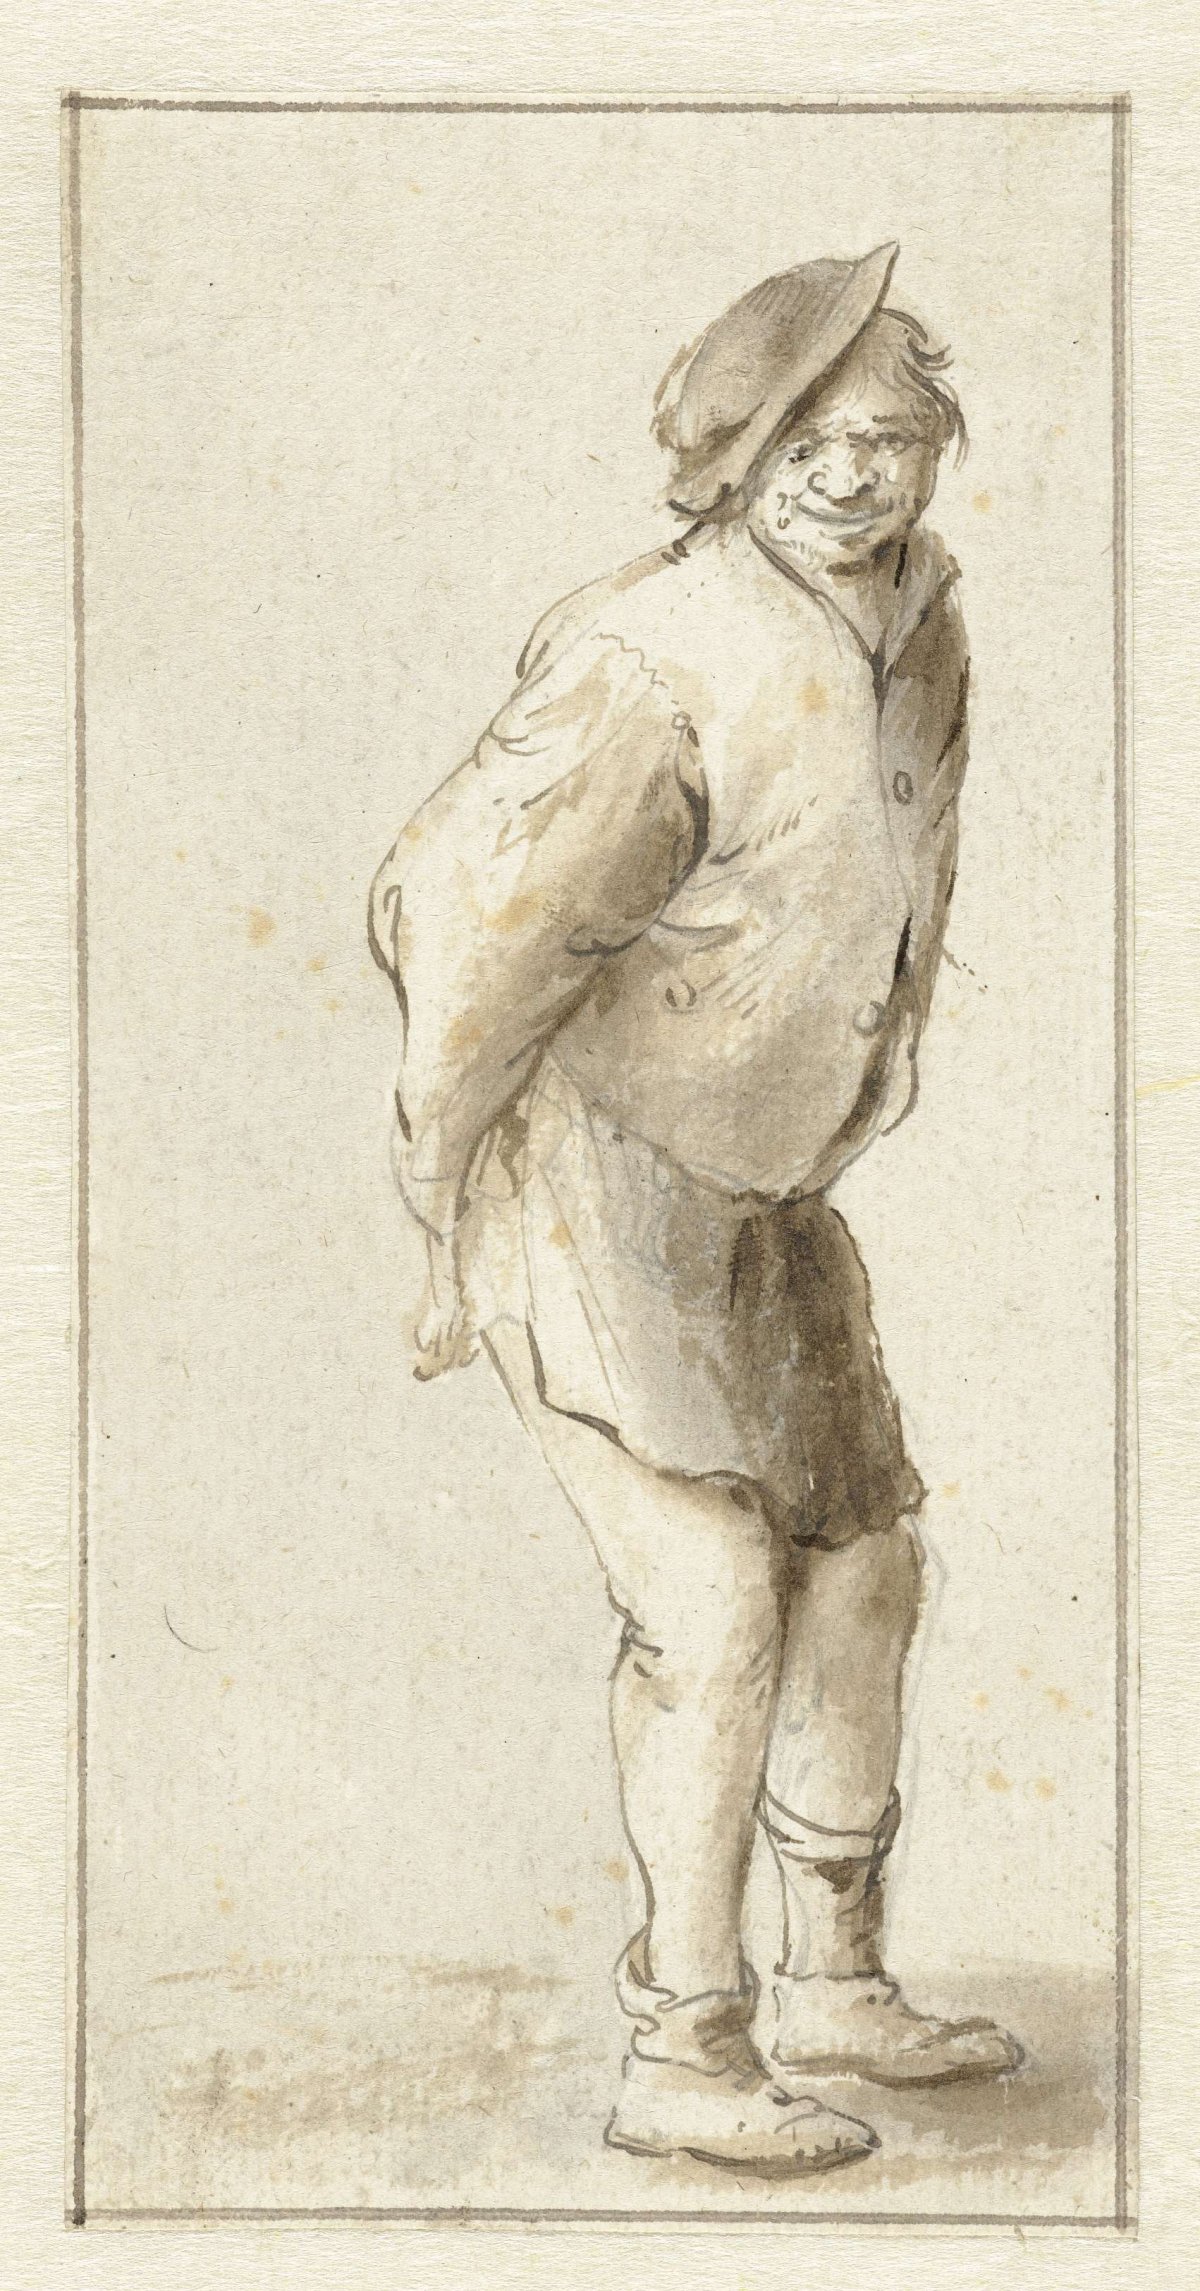 Standing man, slightly bent with hands behind back, Isaac van Ostade, 1631 - 1649